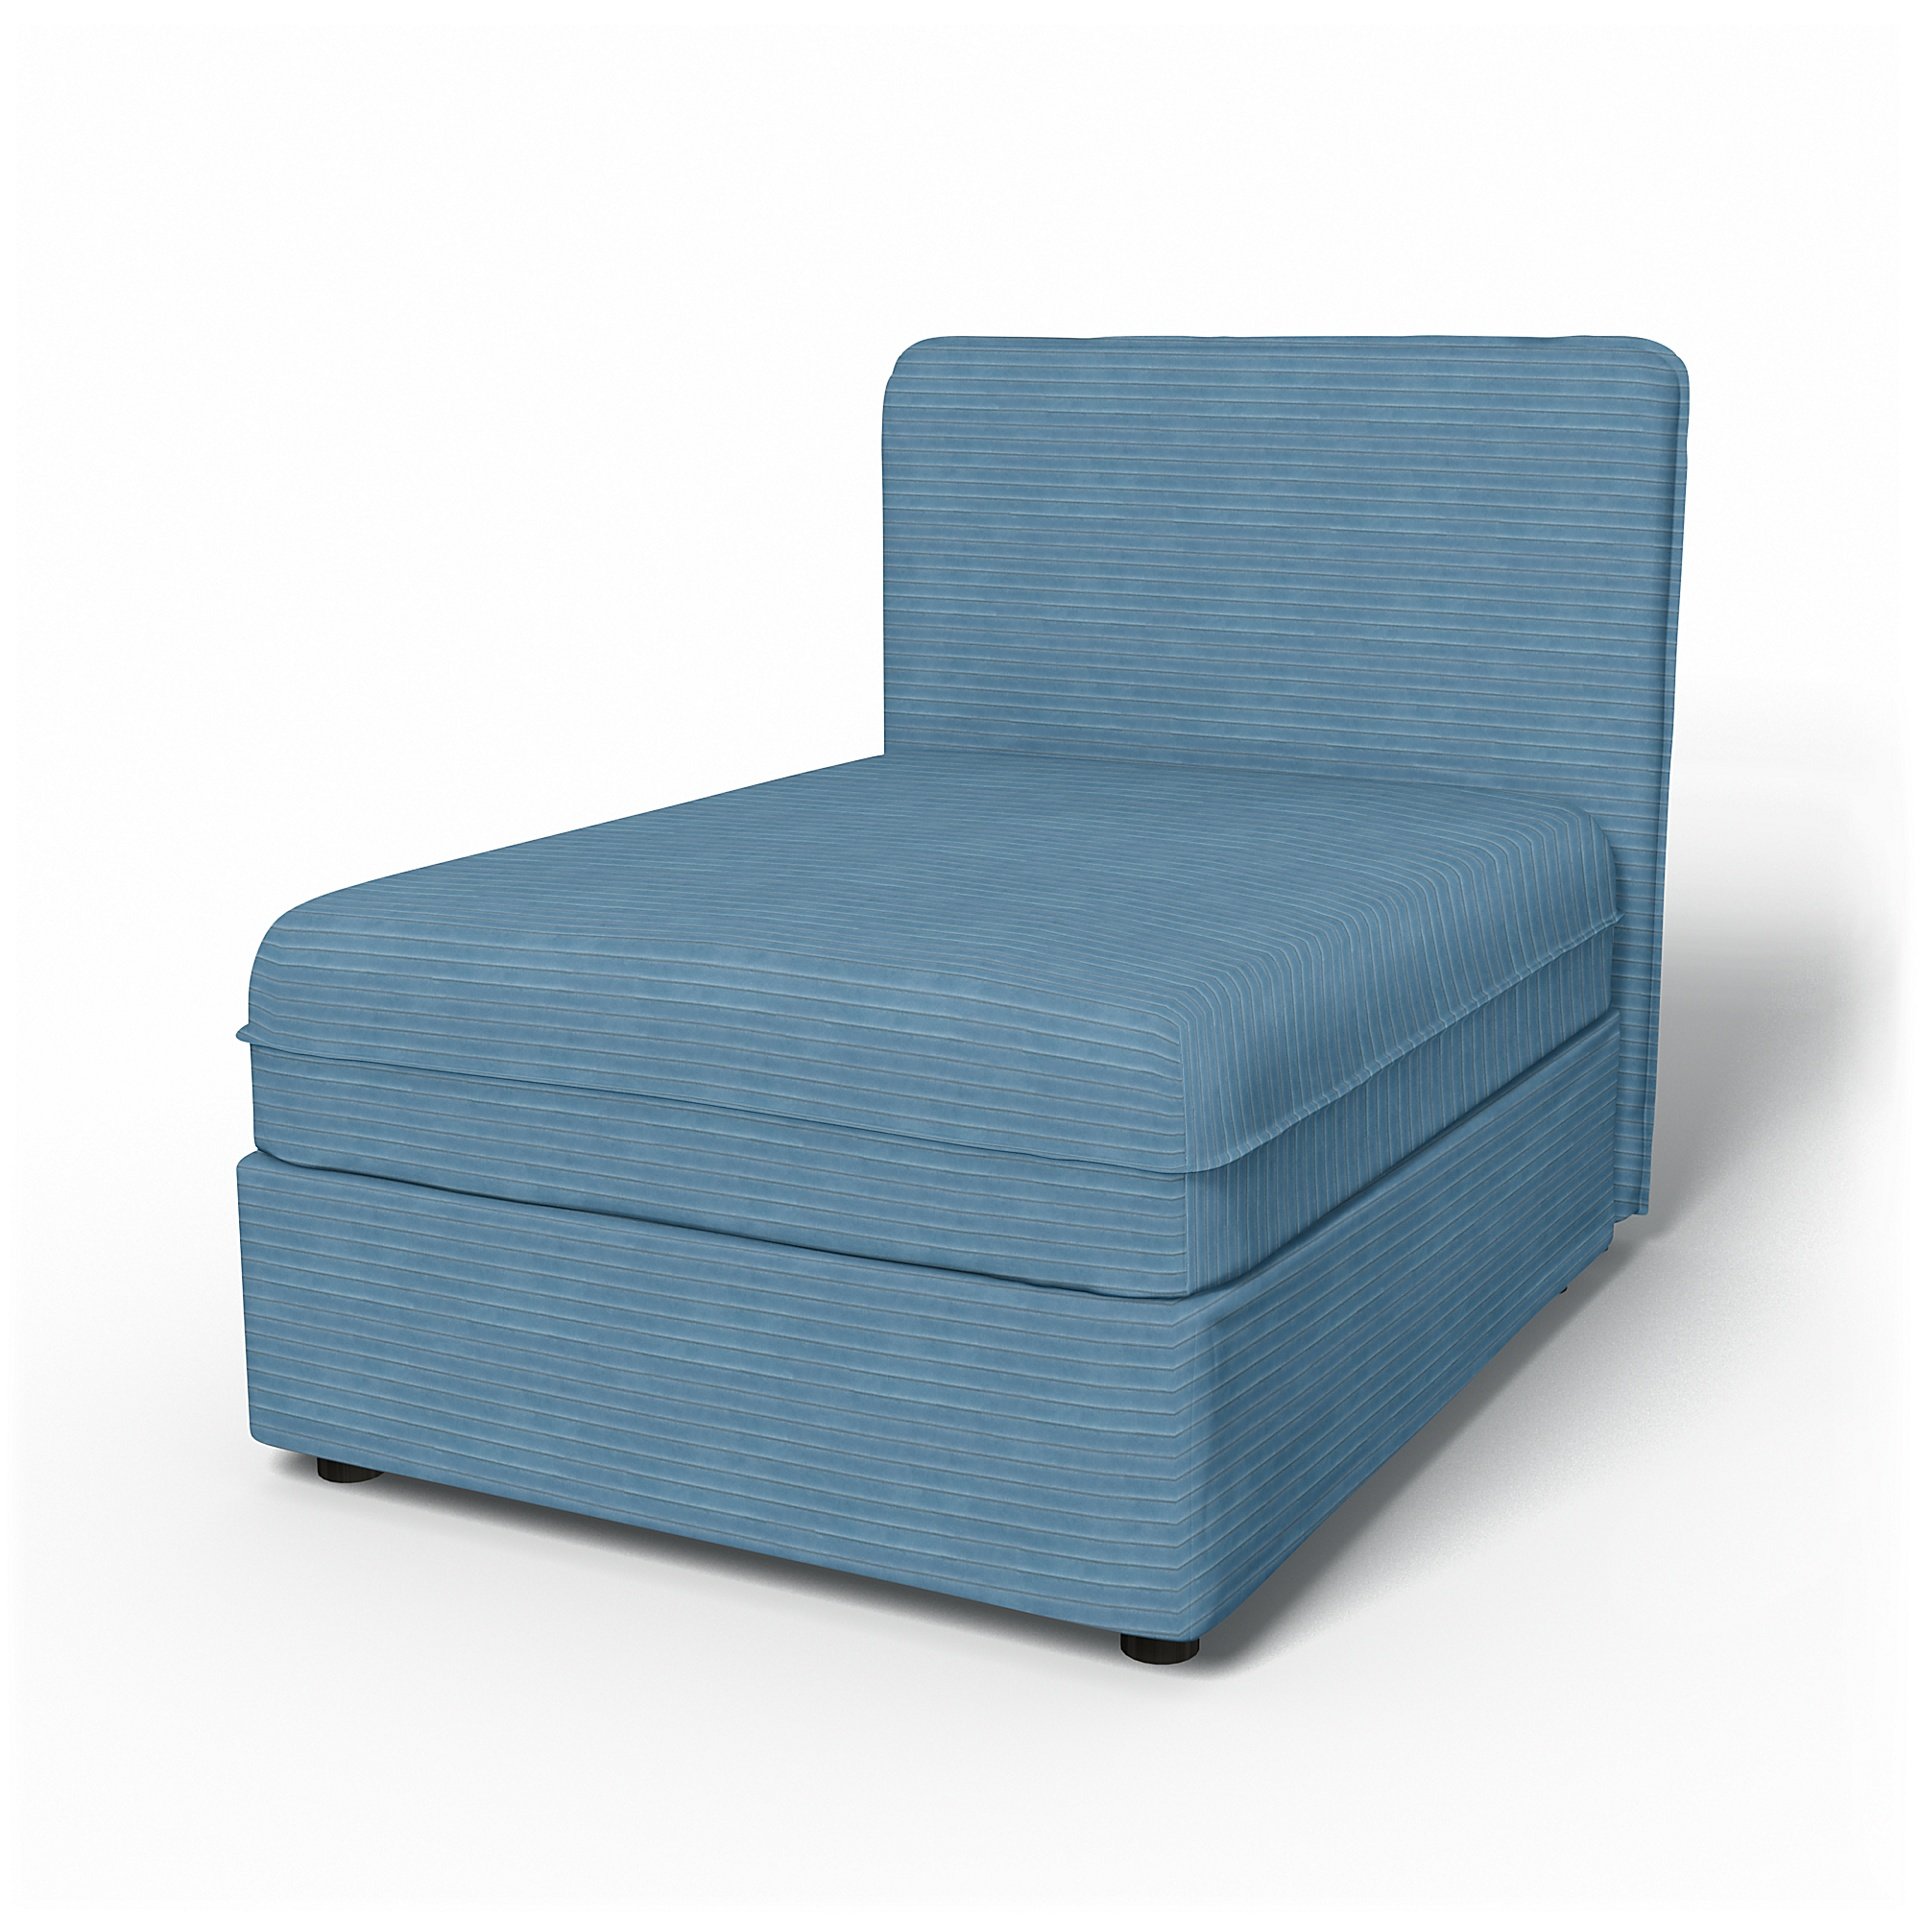 IKEA - Vallentuna Seat Module with Low Back Cover 80x100cm 32x39in, Sky Blue, Corduroy - Bemz